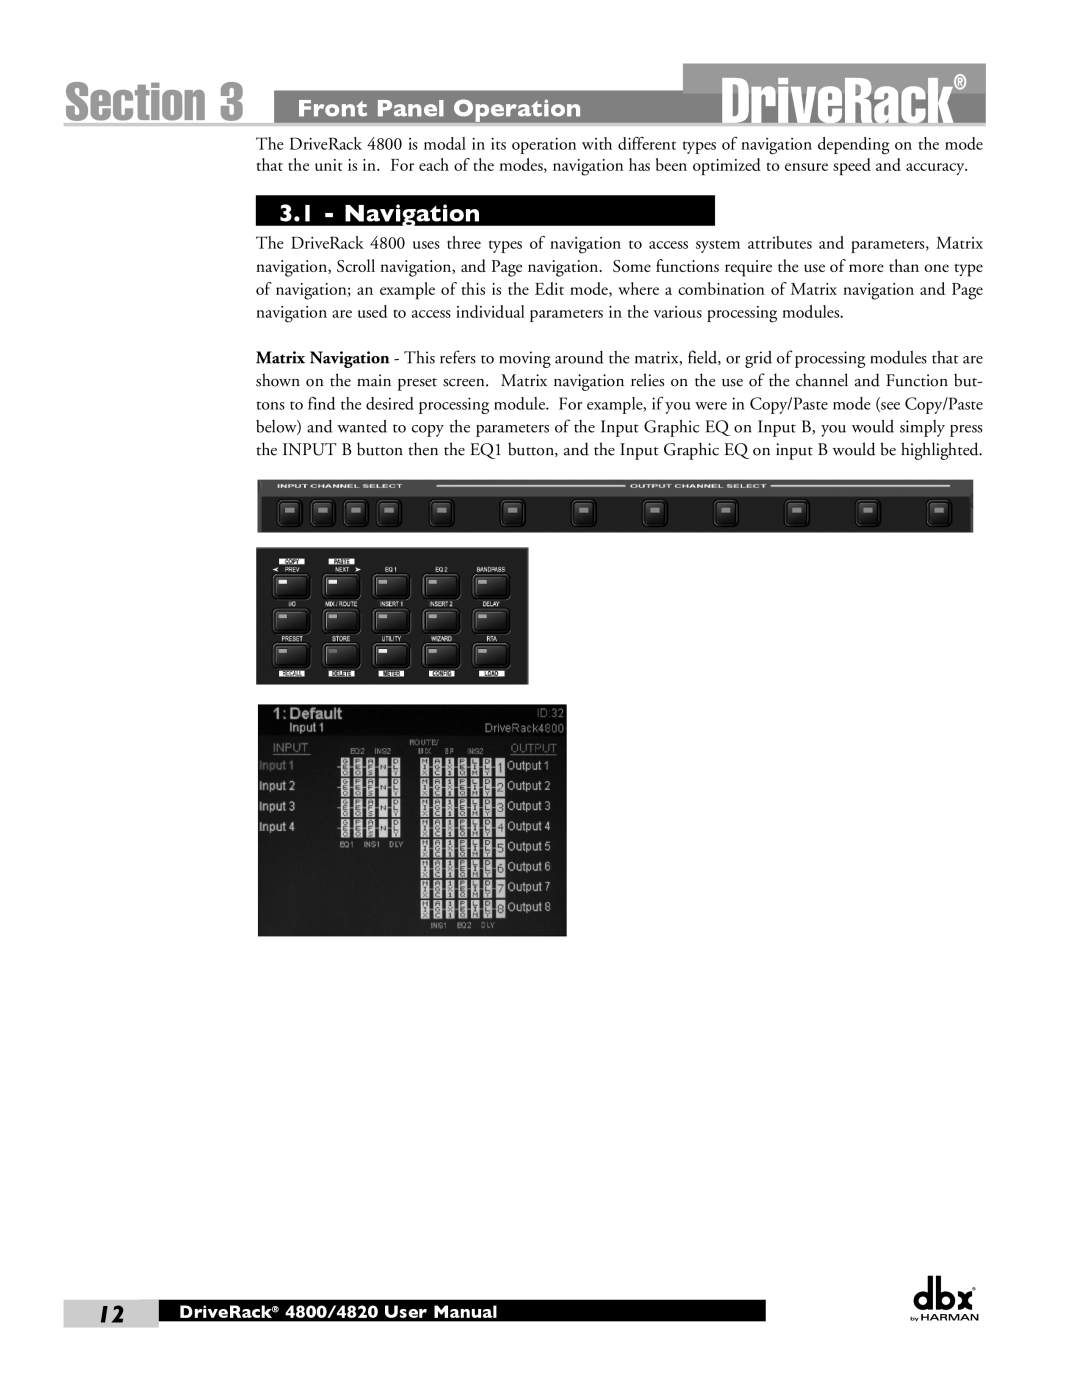 Harman user manual Front Panel Operation, Navigation, Section, DriveRack 4800/4820 User Manual 